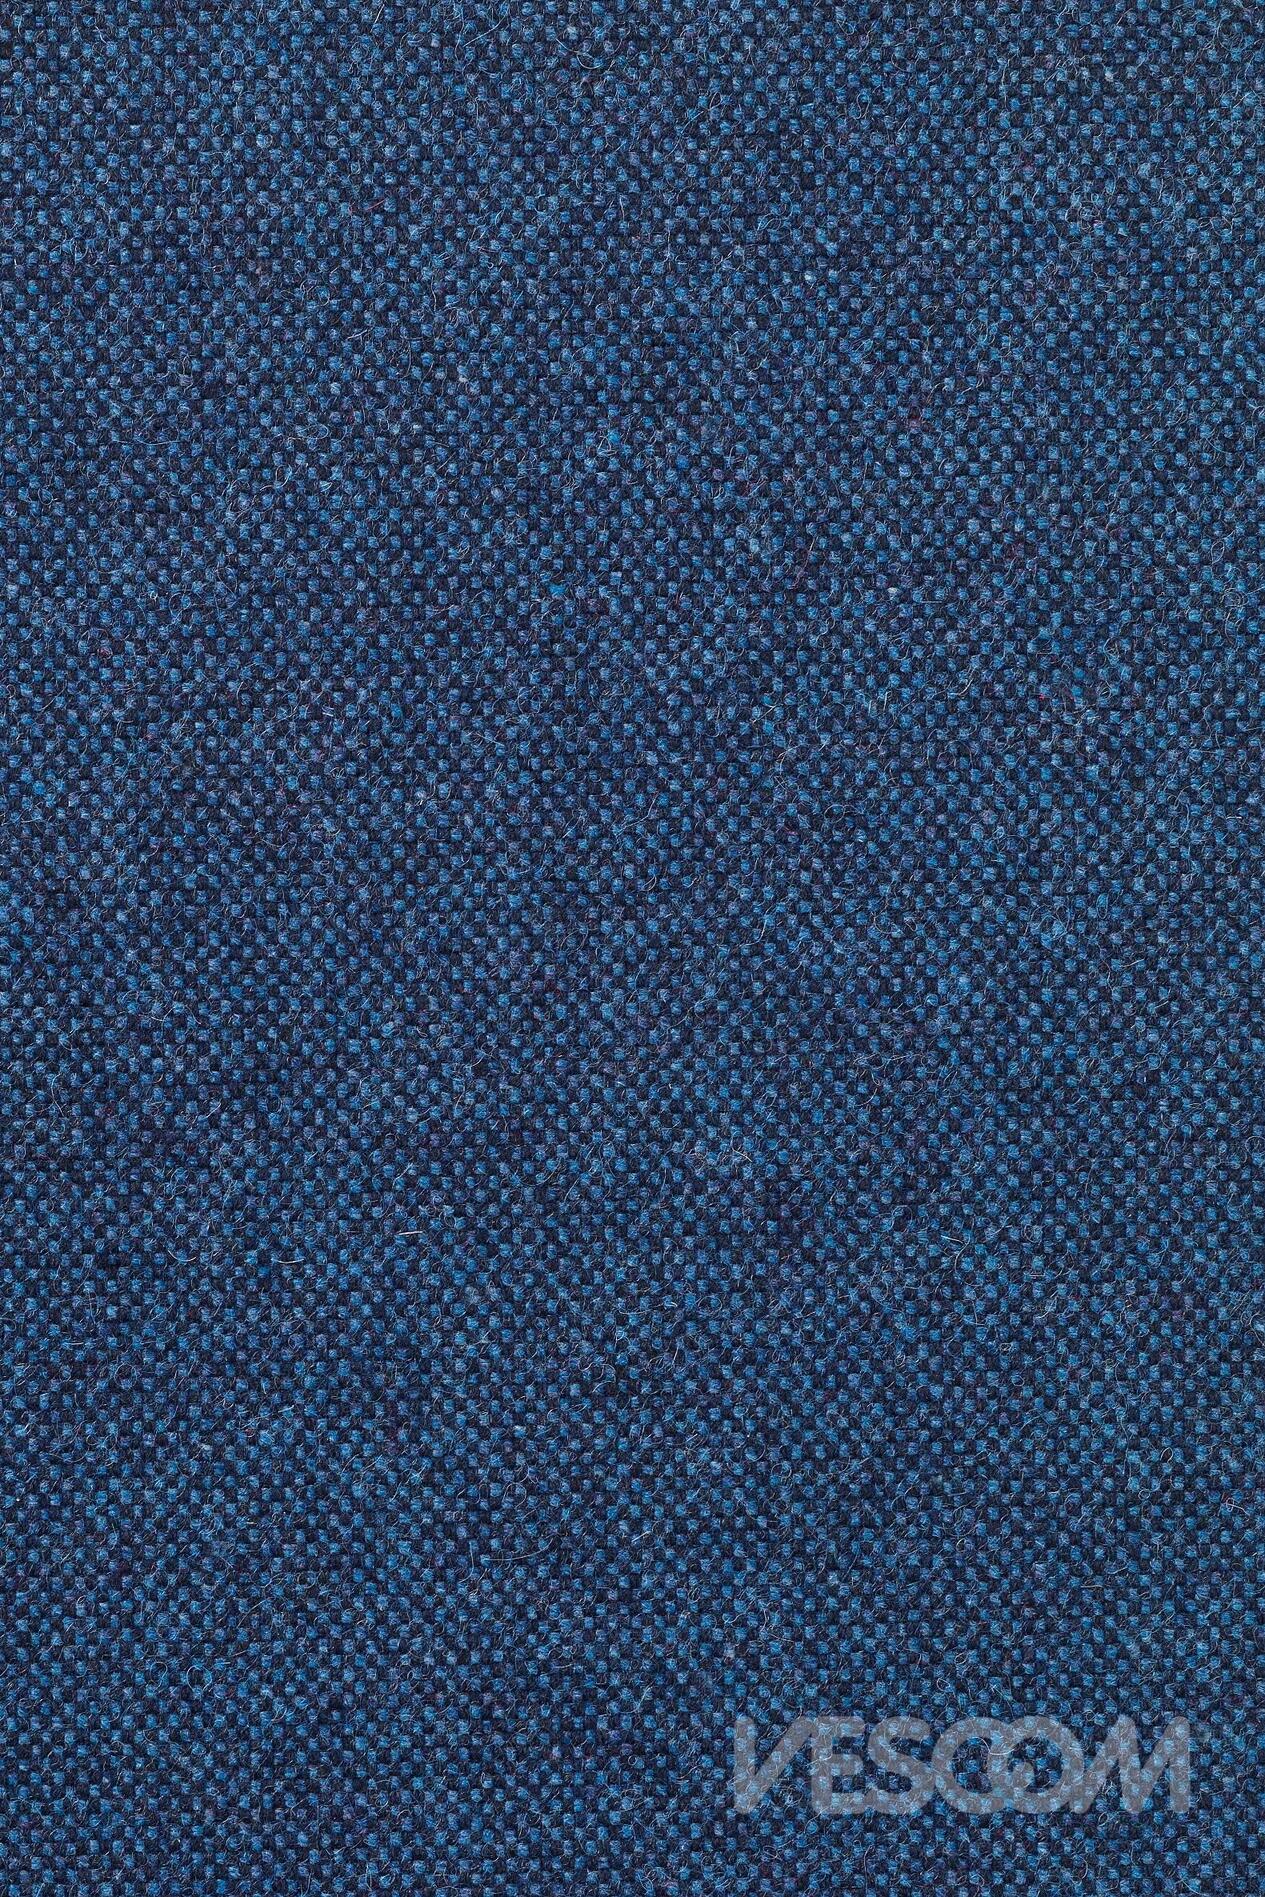 Vescom-Wolin-Upholstery-Fabric-7050.01.jpg